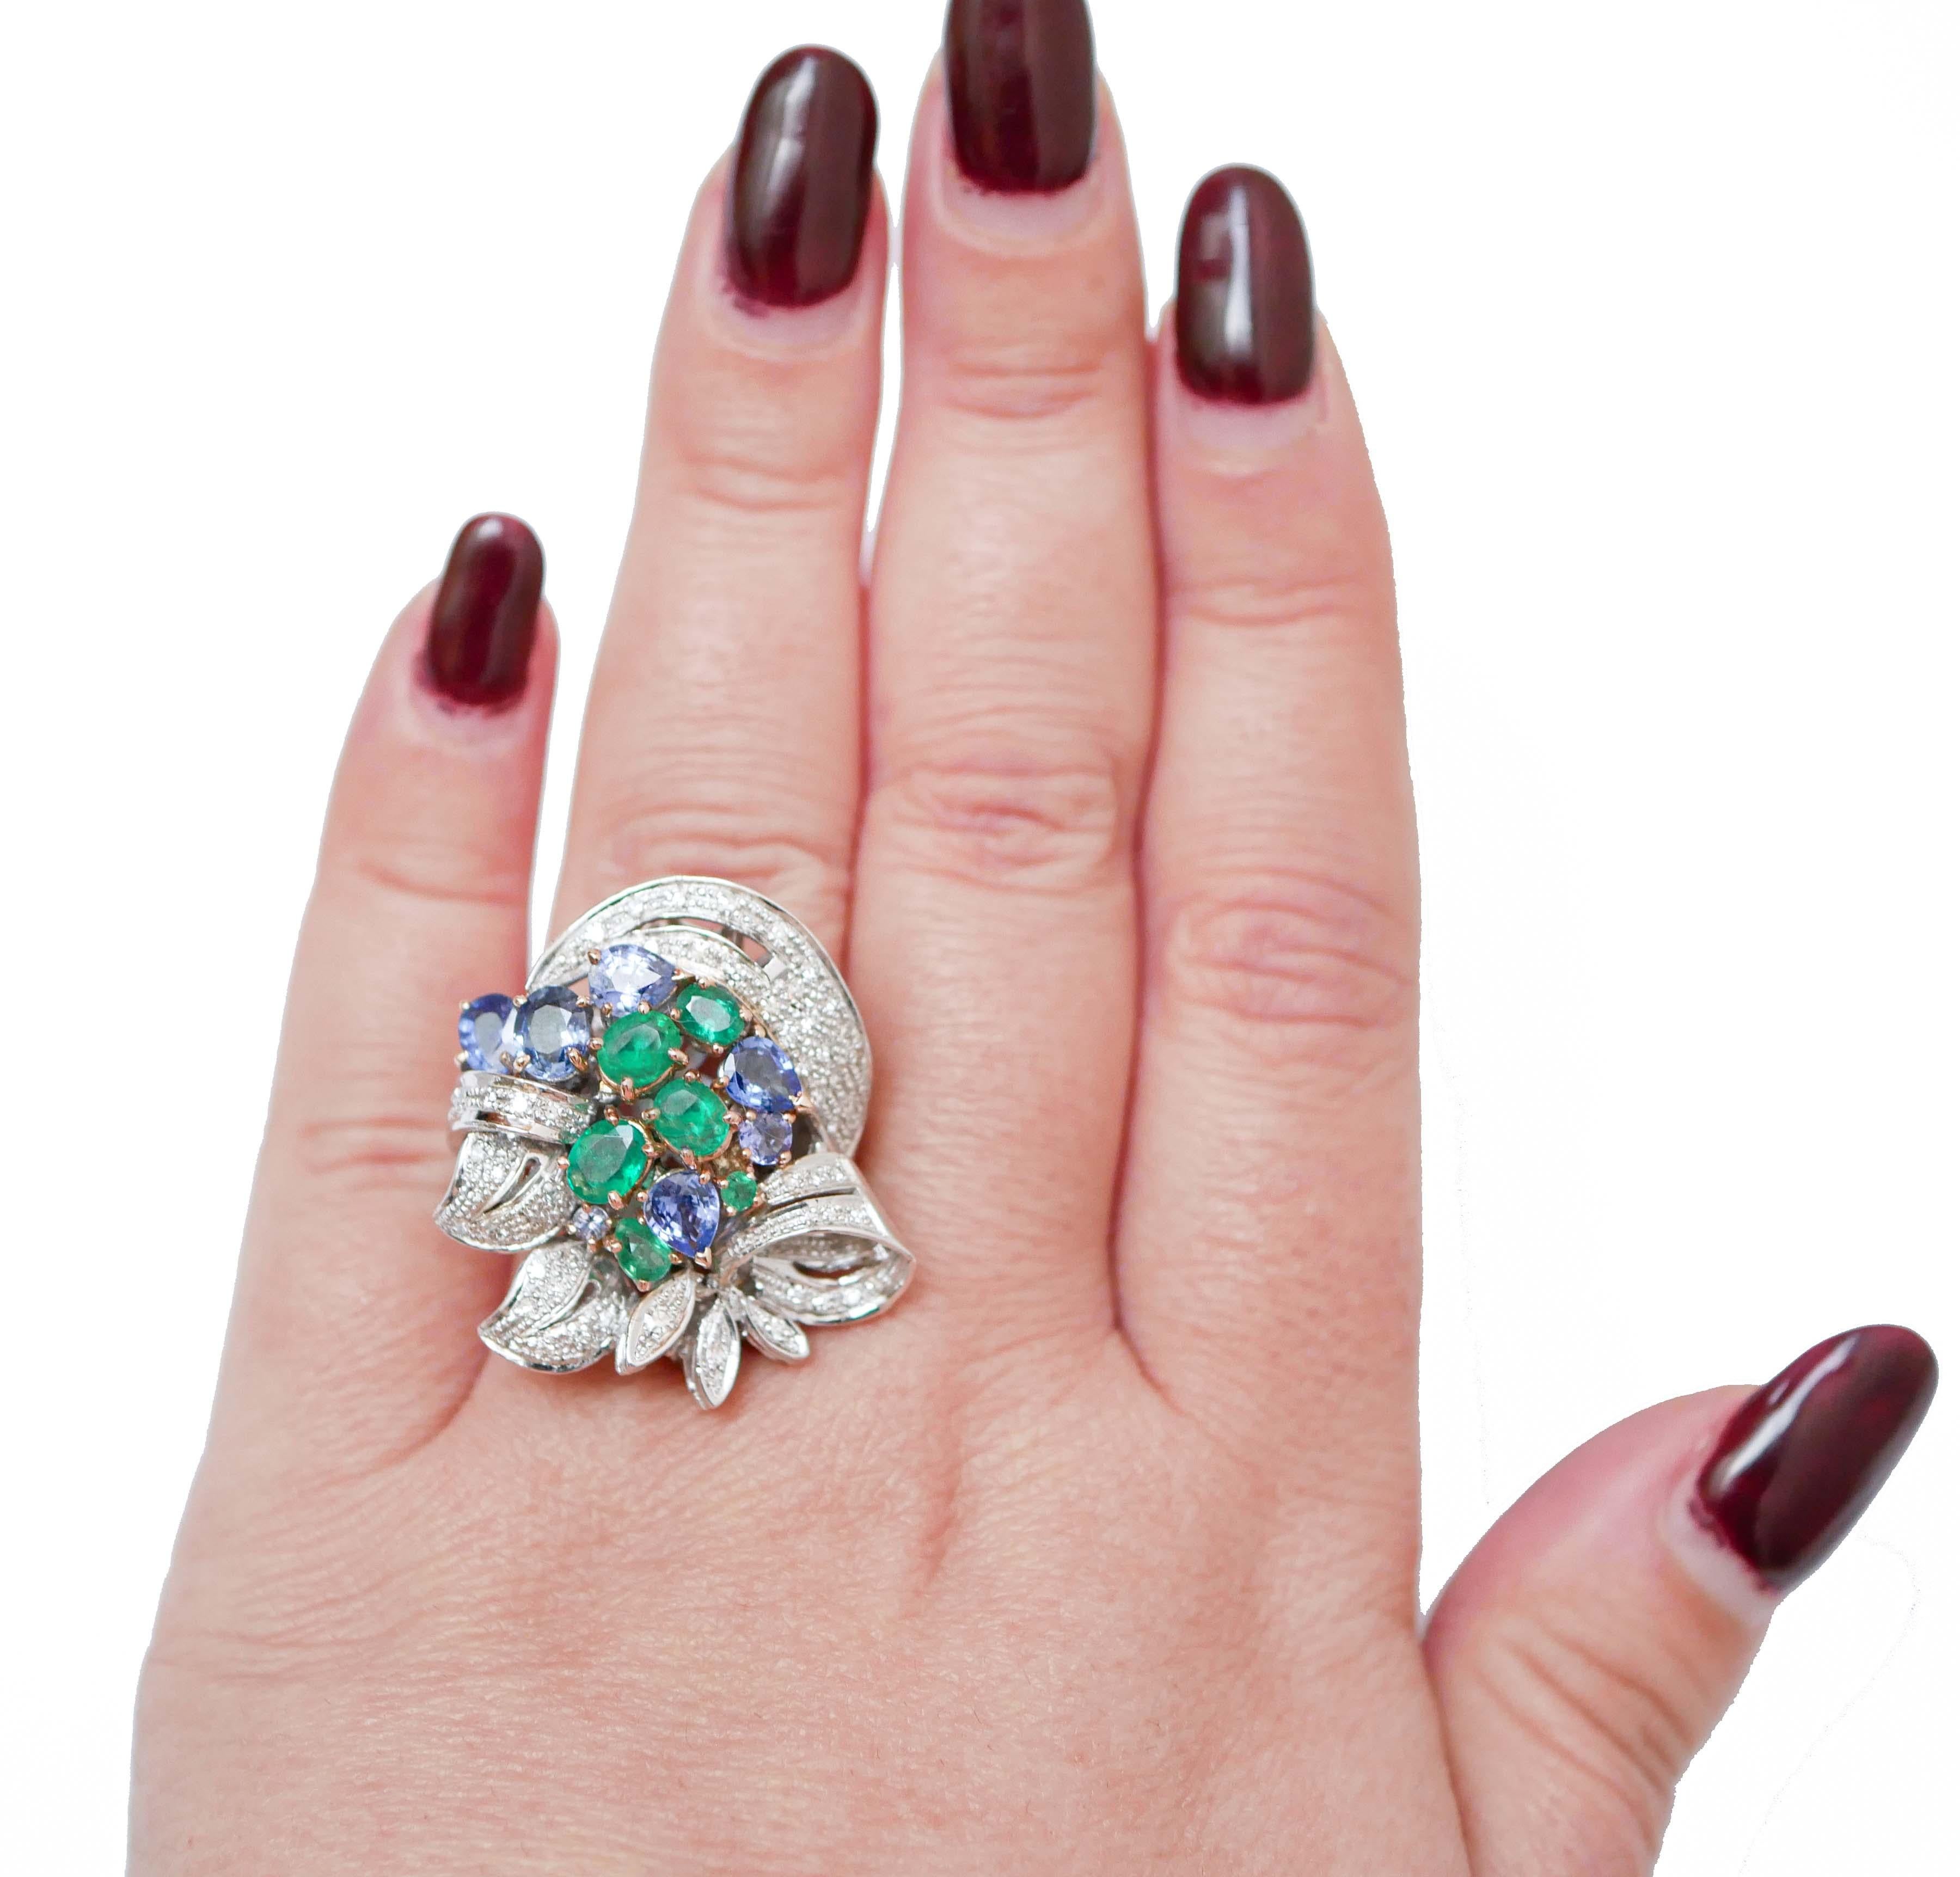 Mixed Cut Emeralds, Sapphires, Diamonds, 14 Karat White Gold Ring. For Sale